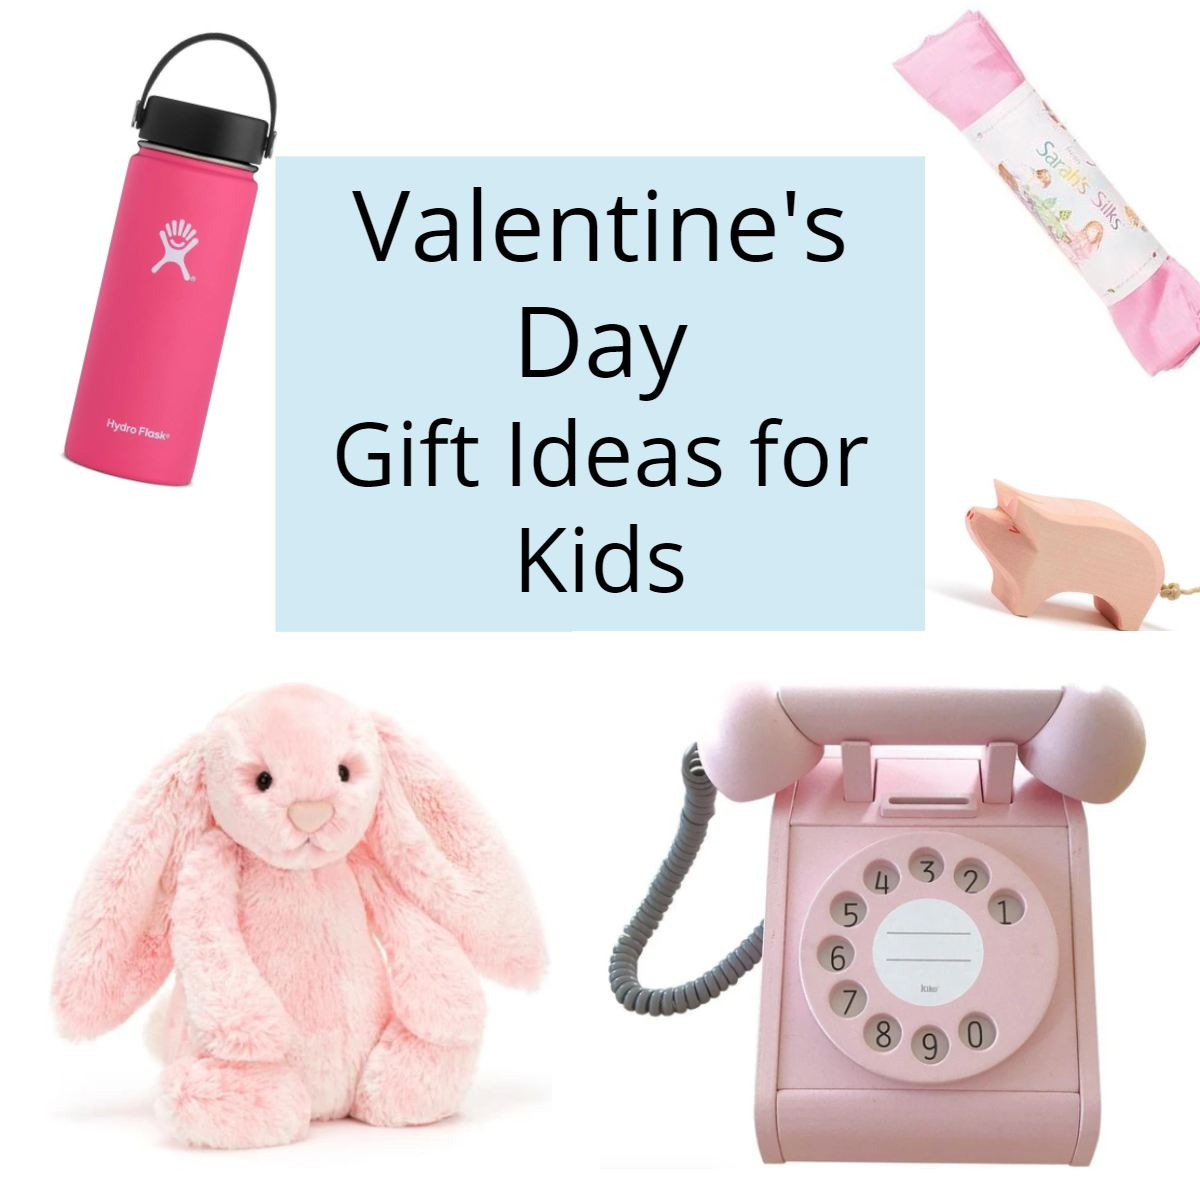 Valentines Gift Ideas 2020
 Valentine s Day Gift Ideas for Kids 2020 The Modern